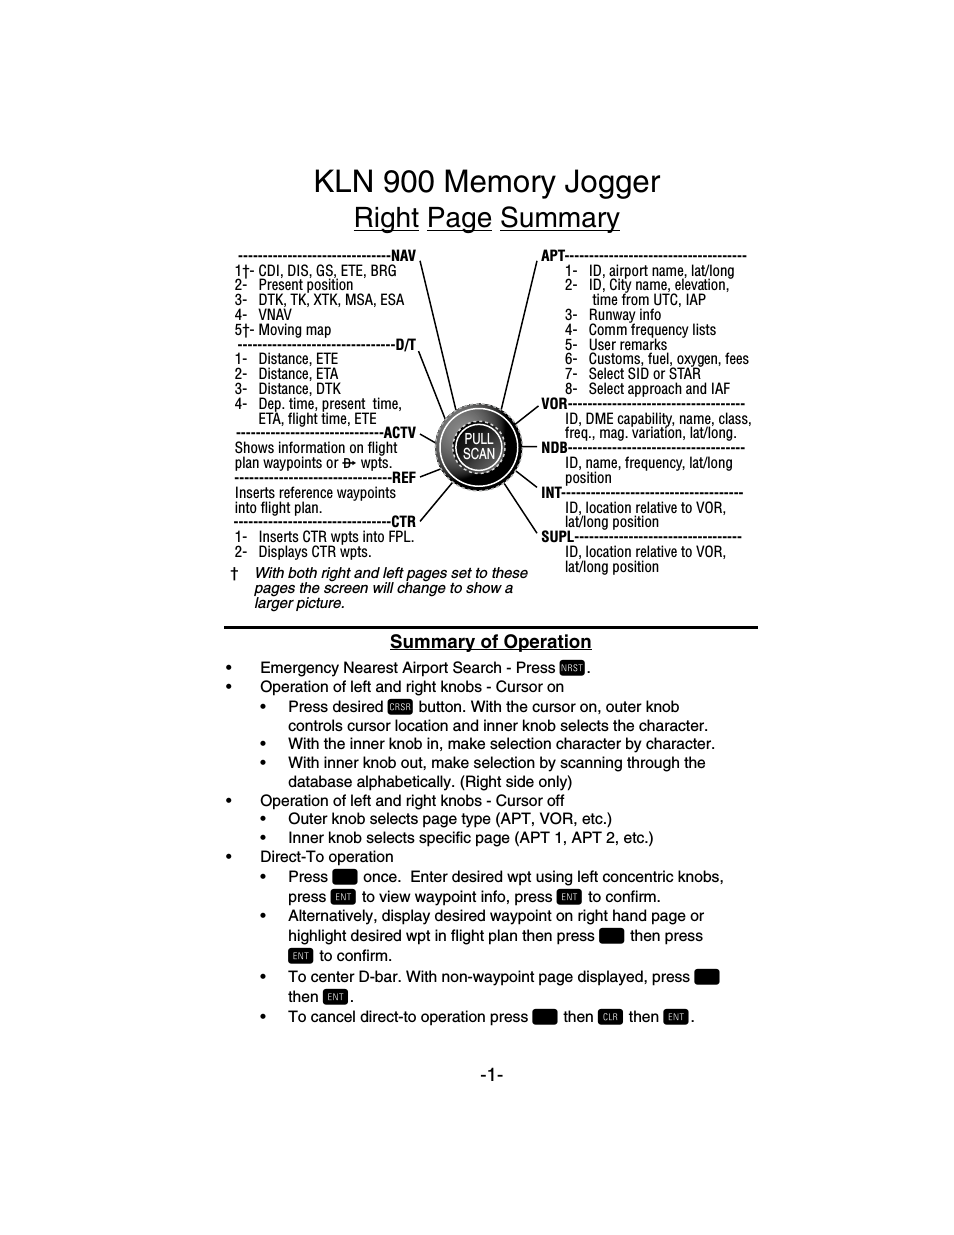 KLN 900 - Memory Jogger